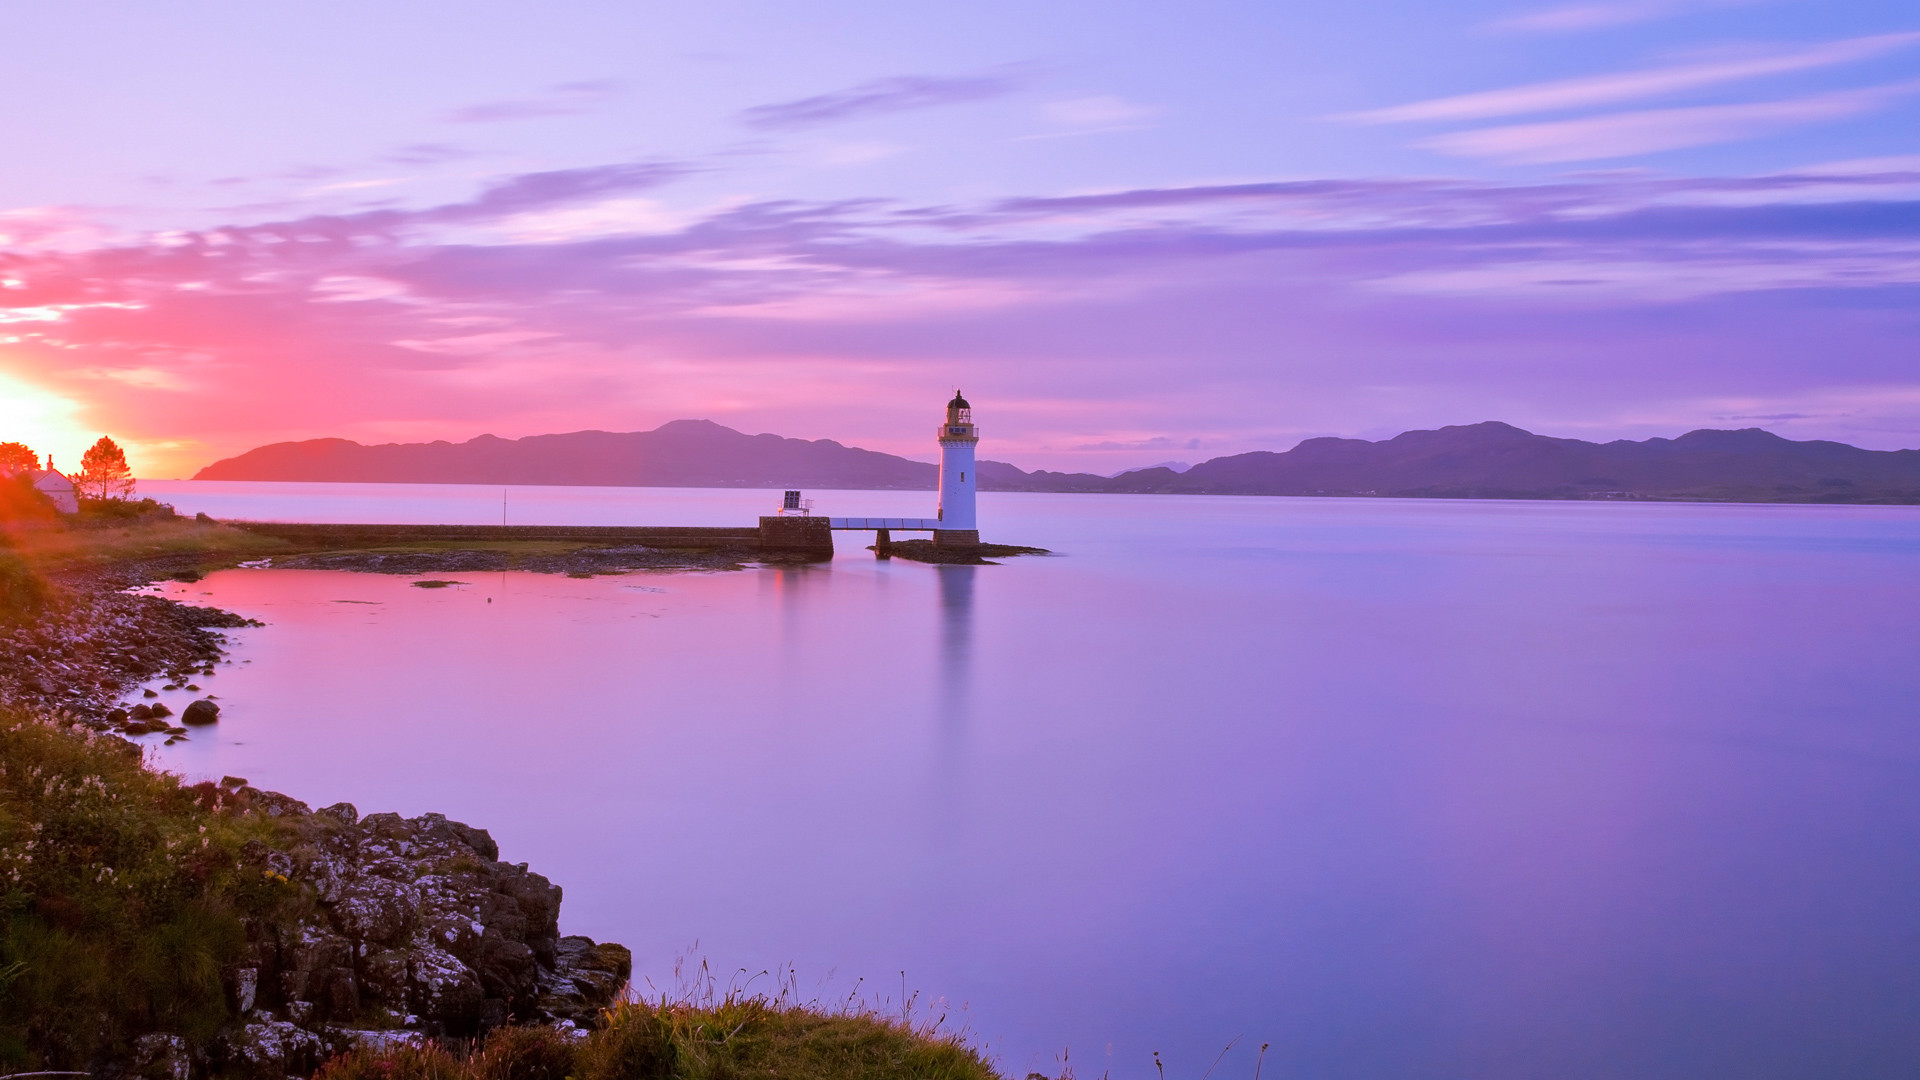 Background image - mull-tobermory-lighthouse.jpg